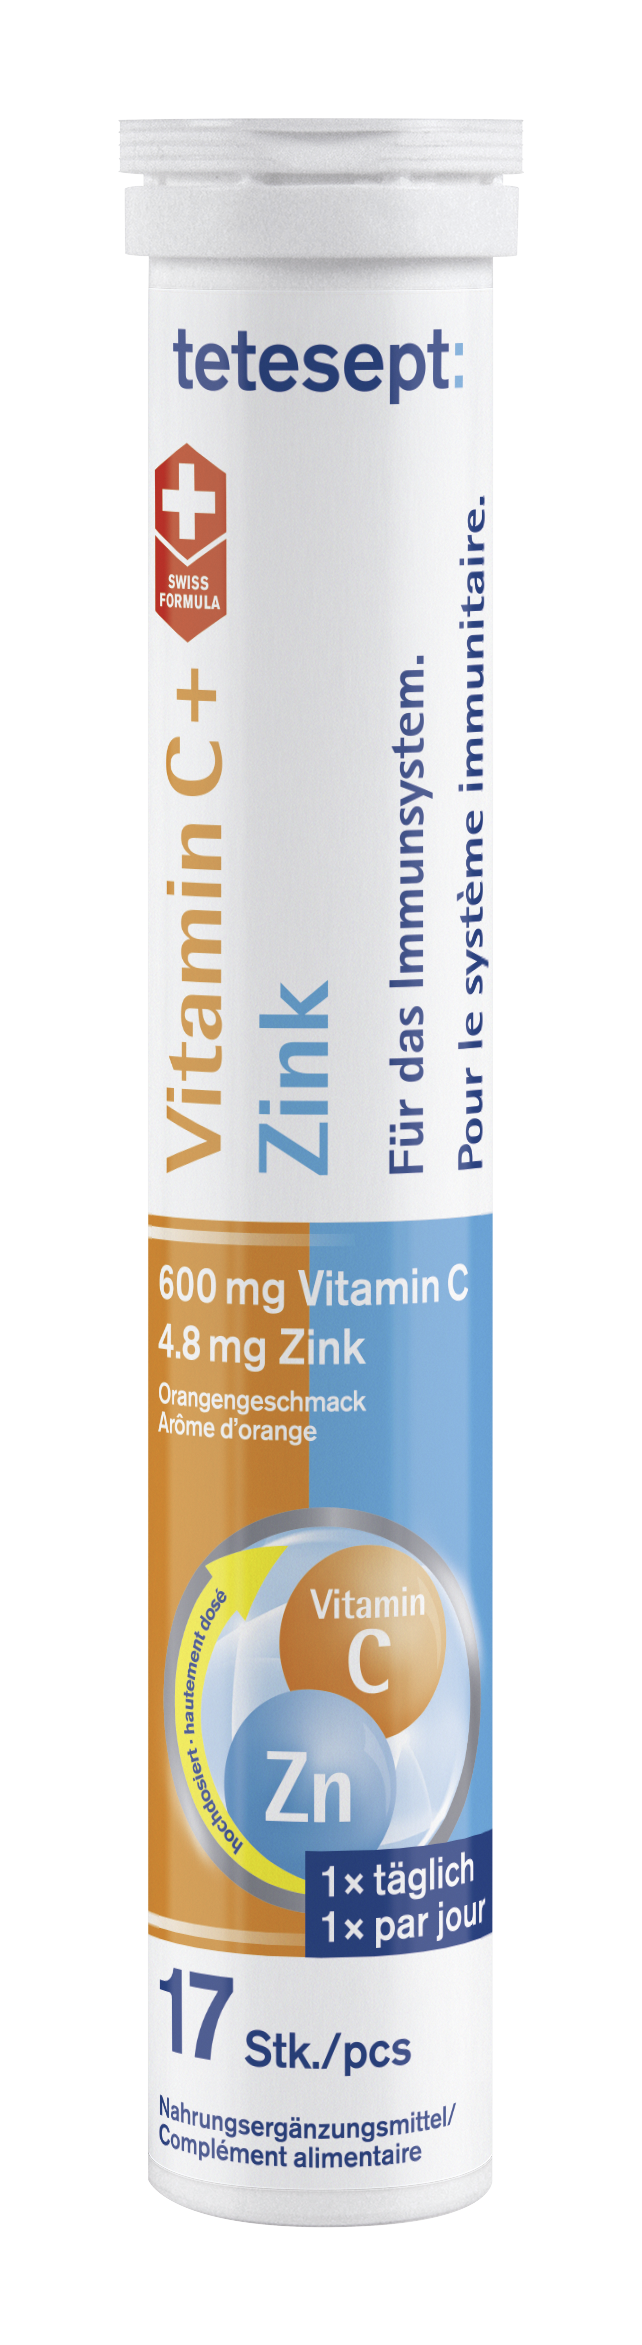 tetesept Vitamin C + Zink Brausetablette